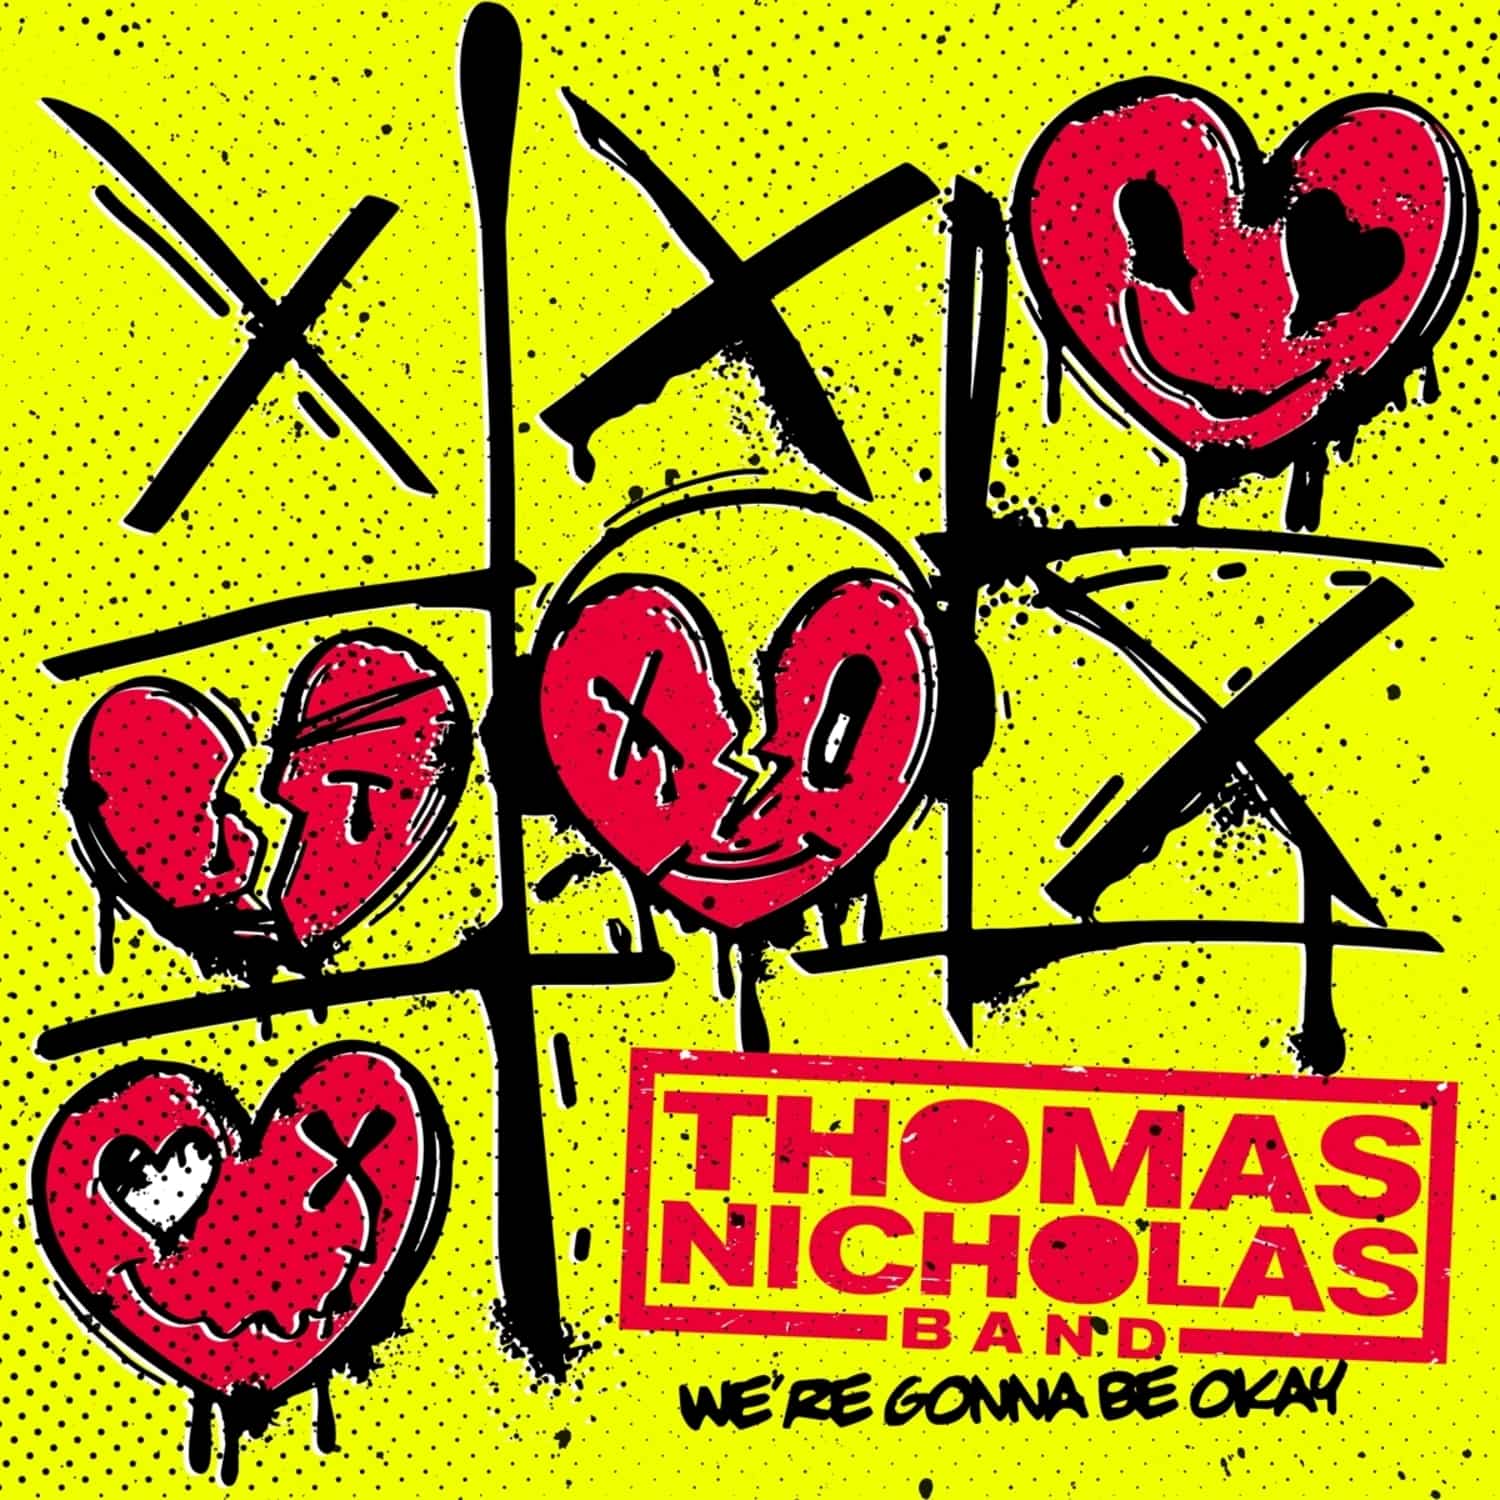 Thomas Nicholas Band - WE RE GONNA BE OKAY 